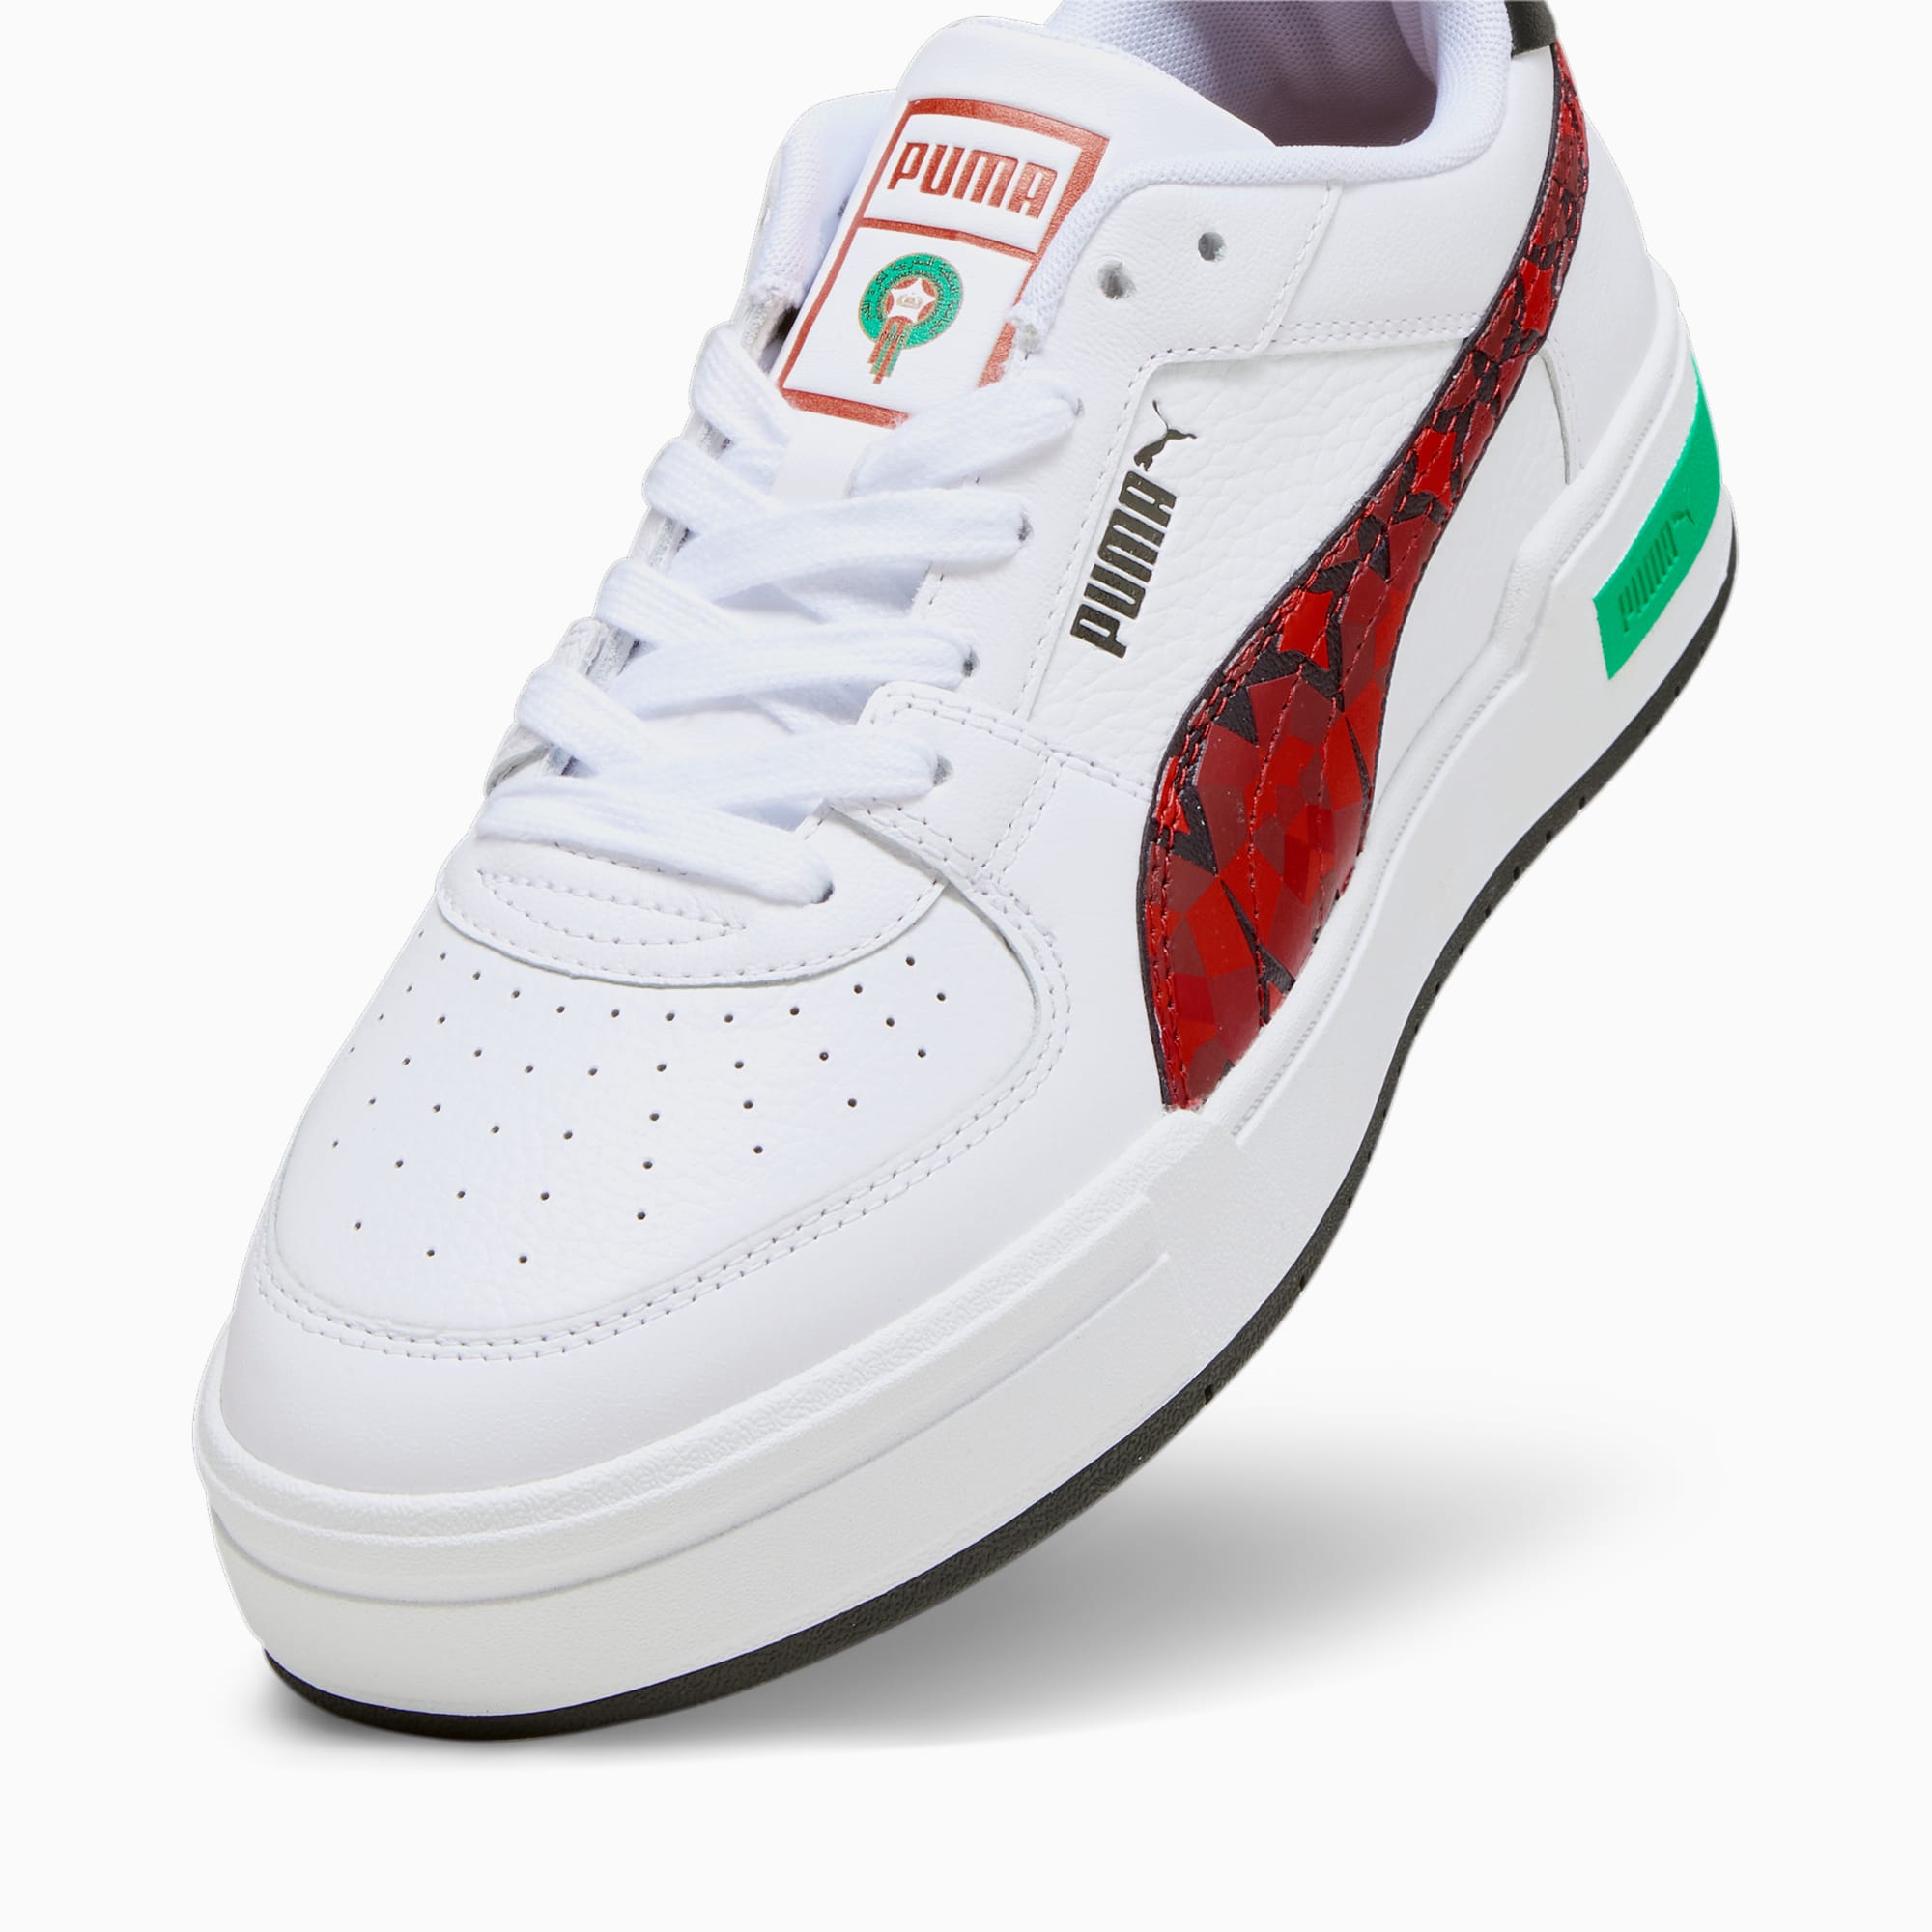 PUMA Chaussure Sneakers De Football CA Pro Maroc Pour Homme, Blanc/Rouge